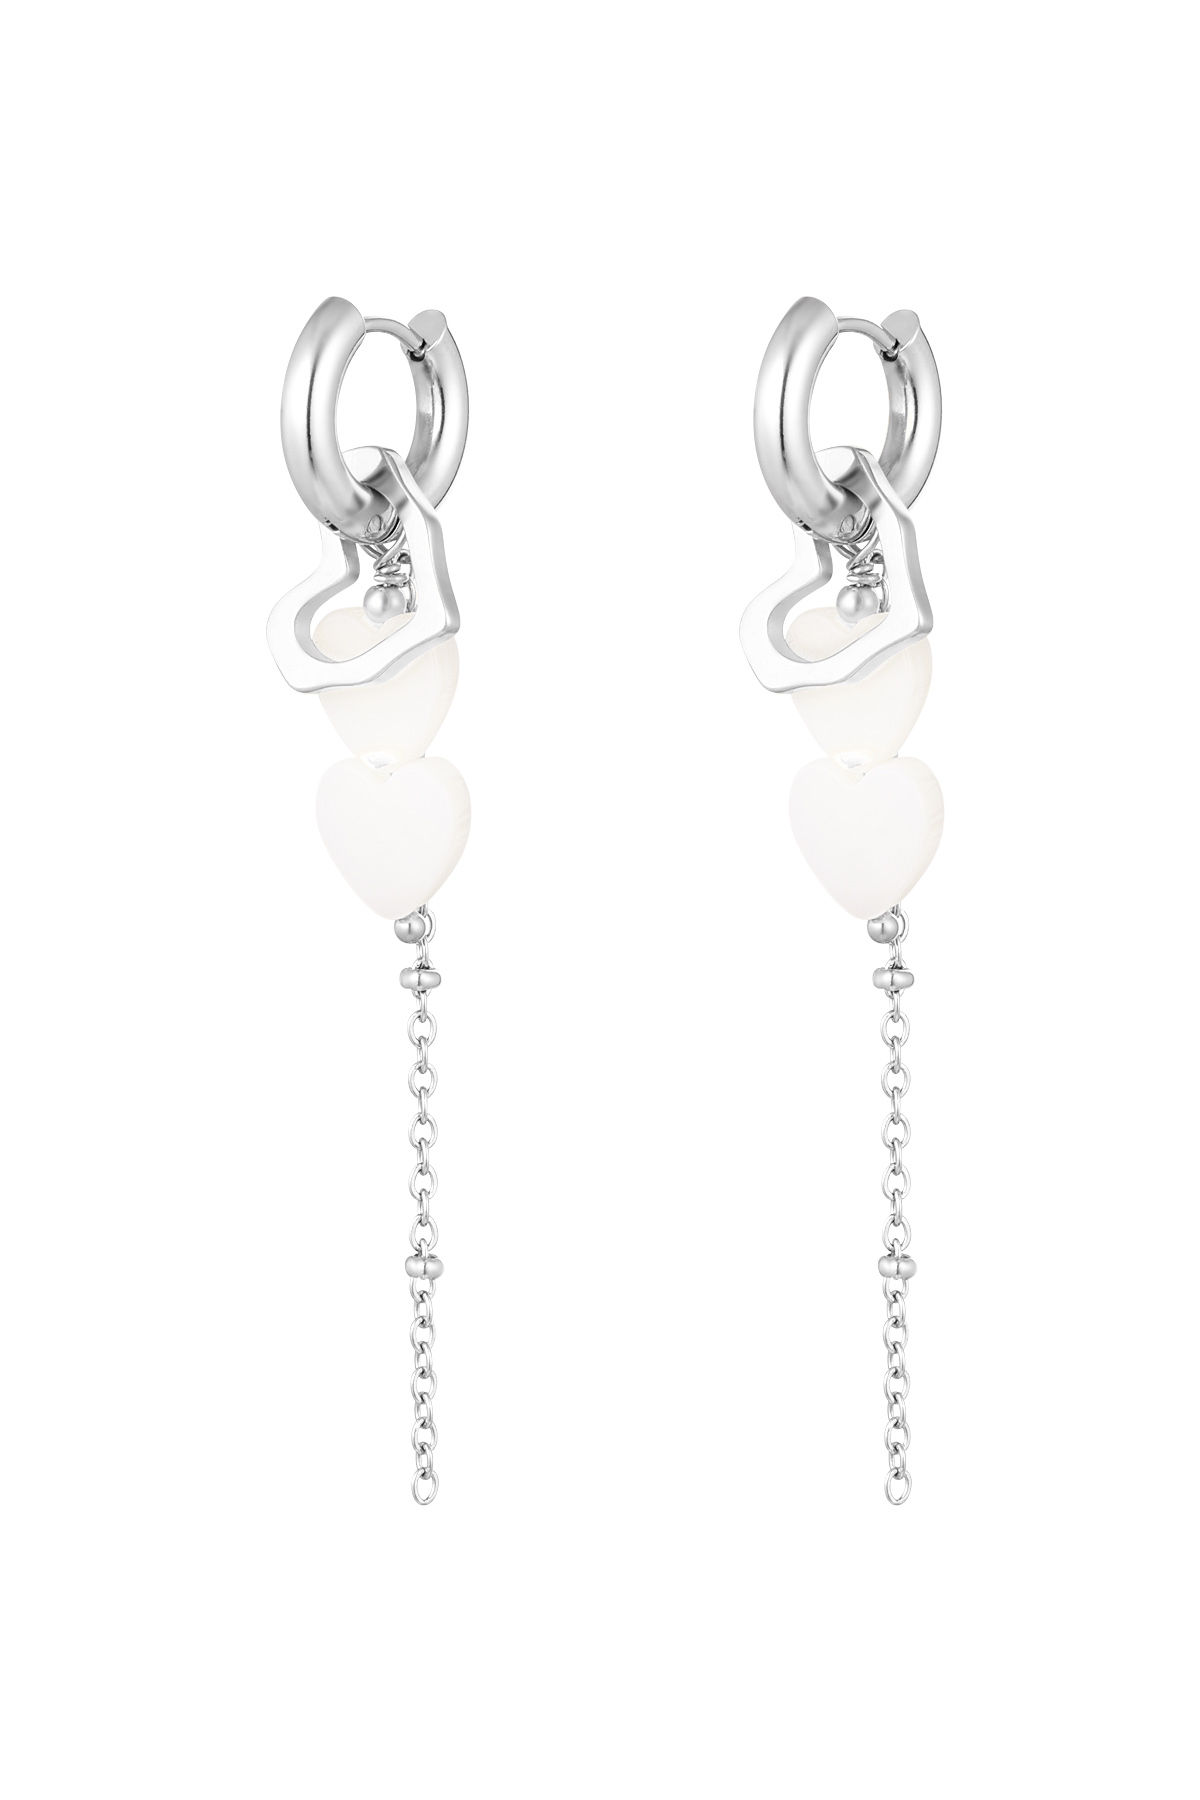 Earrings with heart pendants - silver Stainless Steel 